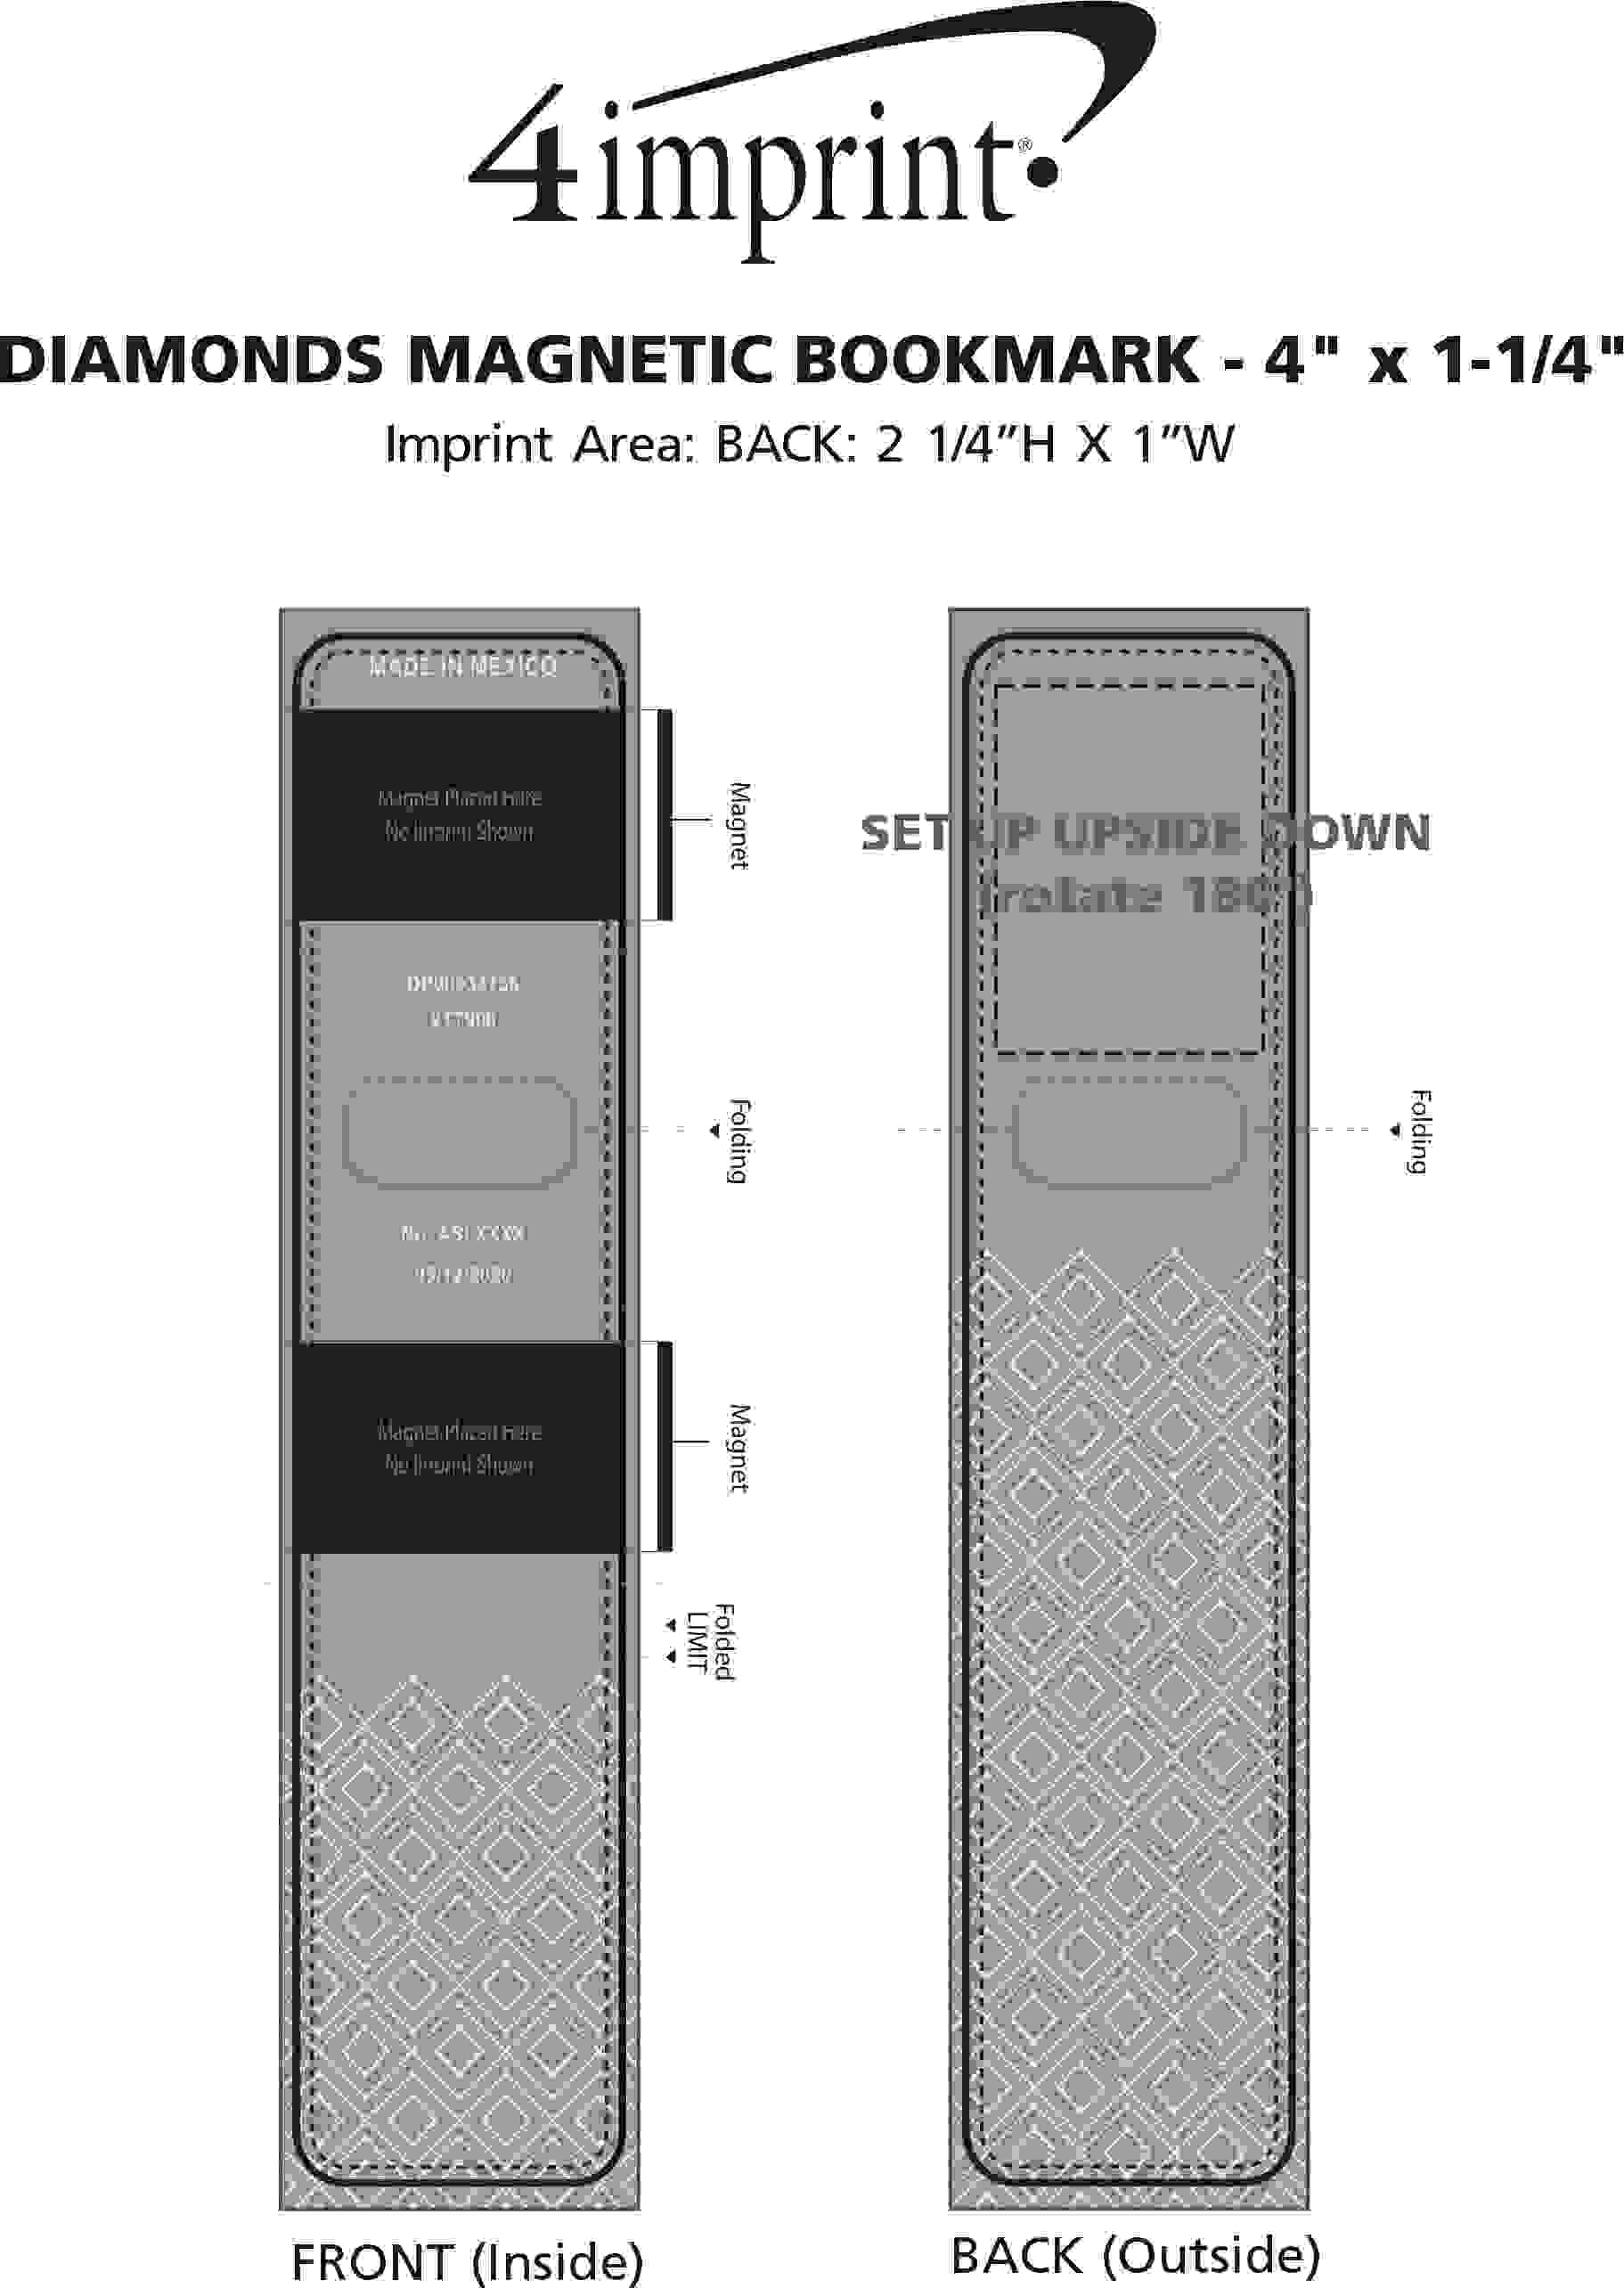 Imprint Area of Diamonds Magnetic Bookmark - 4" x 1-1/4"